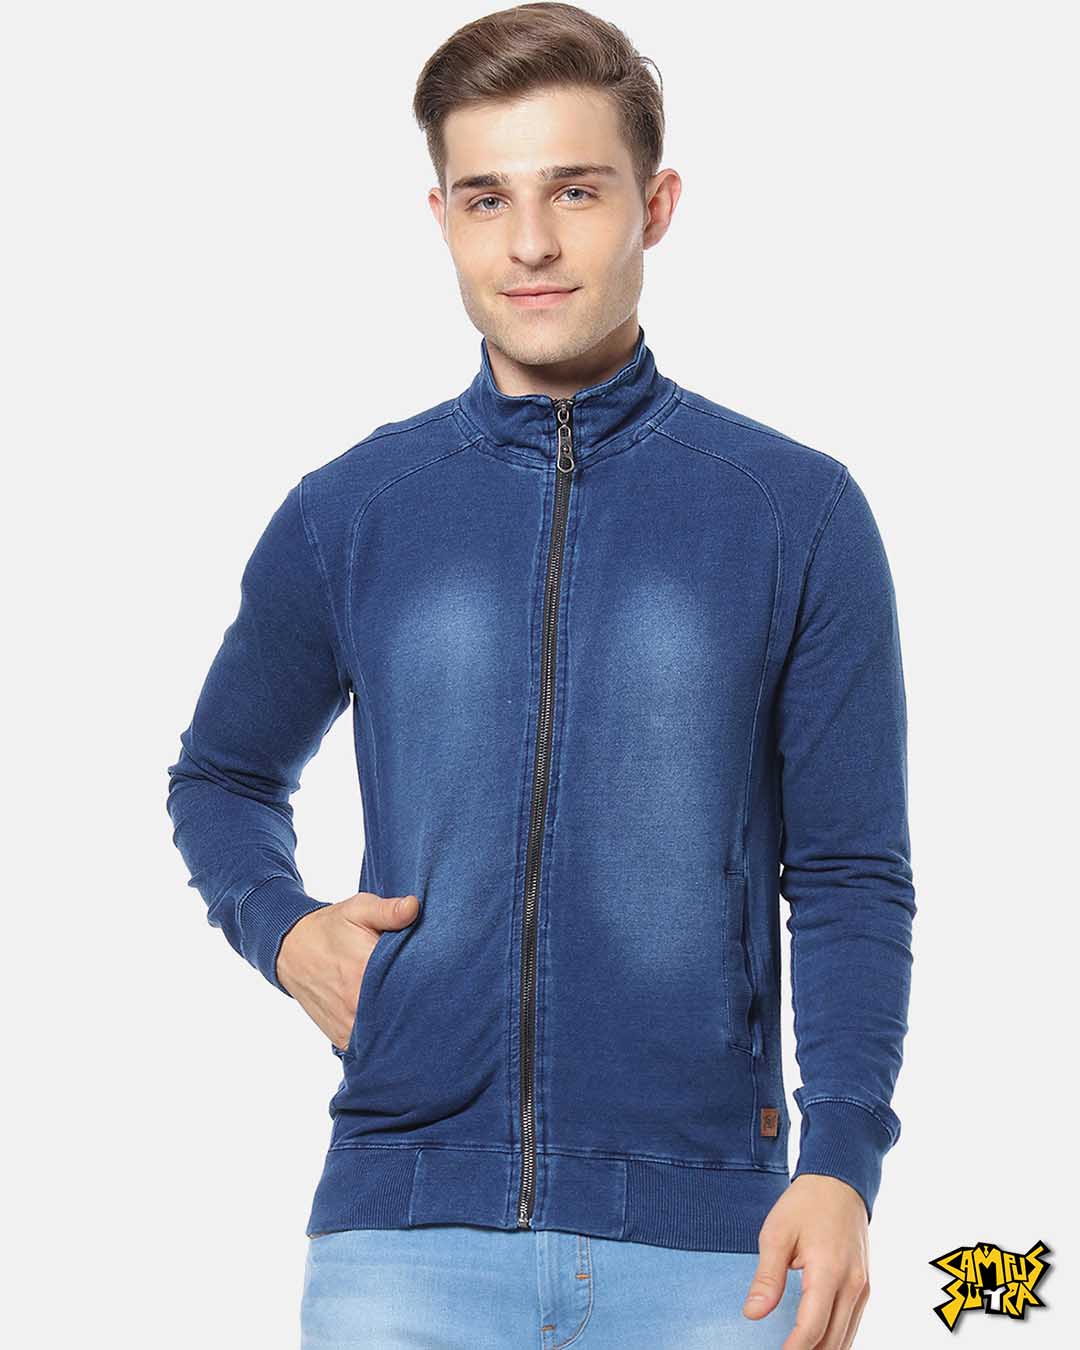 Buy Campus Sutra Men Solid Stylish Casual Denim Jacket for Men blue ...